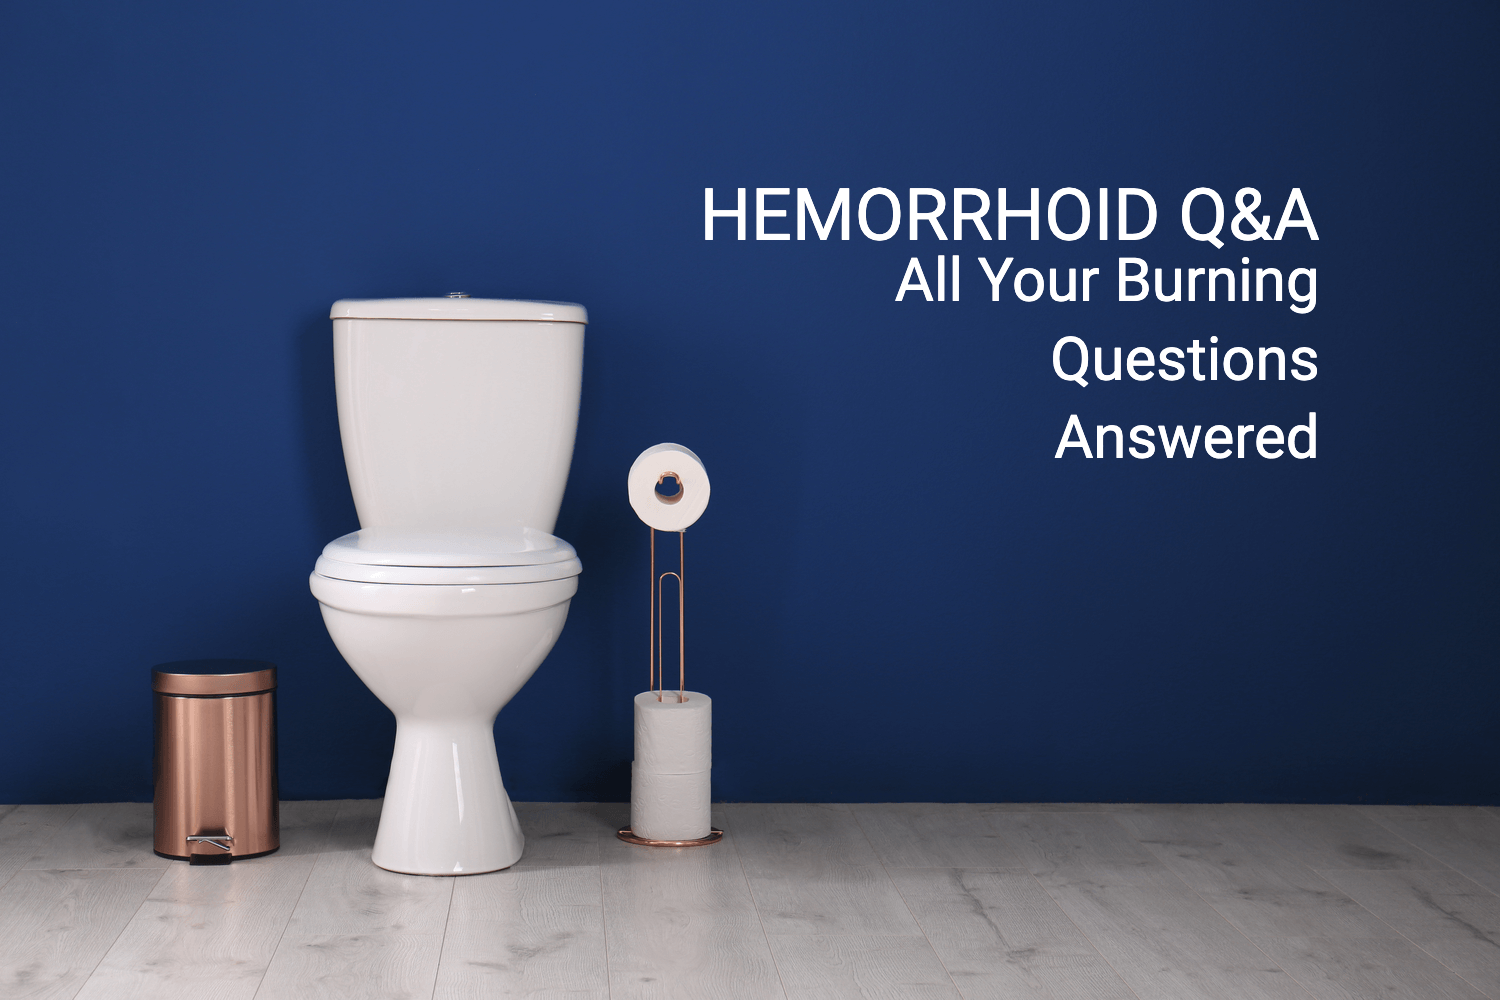 Hemorrhoid Q&A banner image